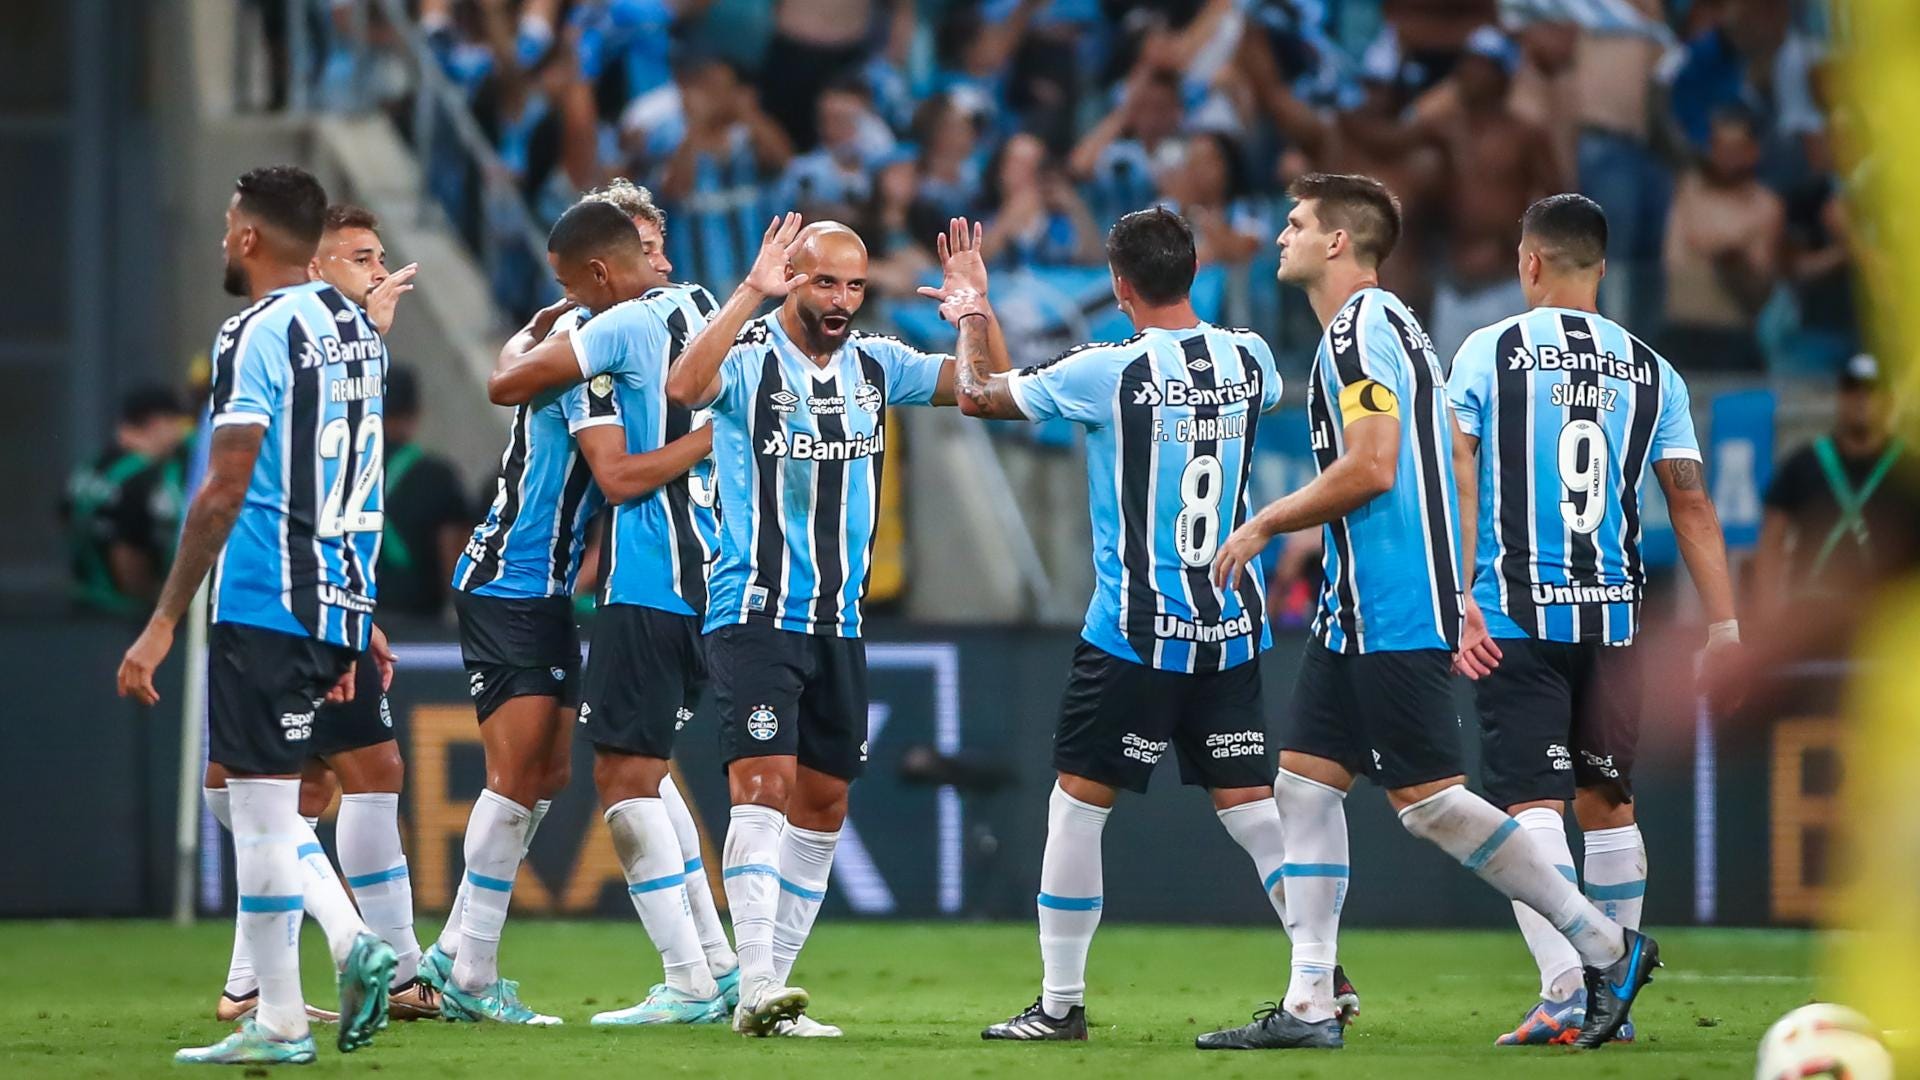 Grêmio vs Santos: A Rivalry Rooted in Brazilian Football History